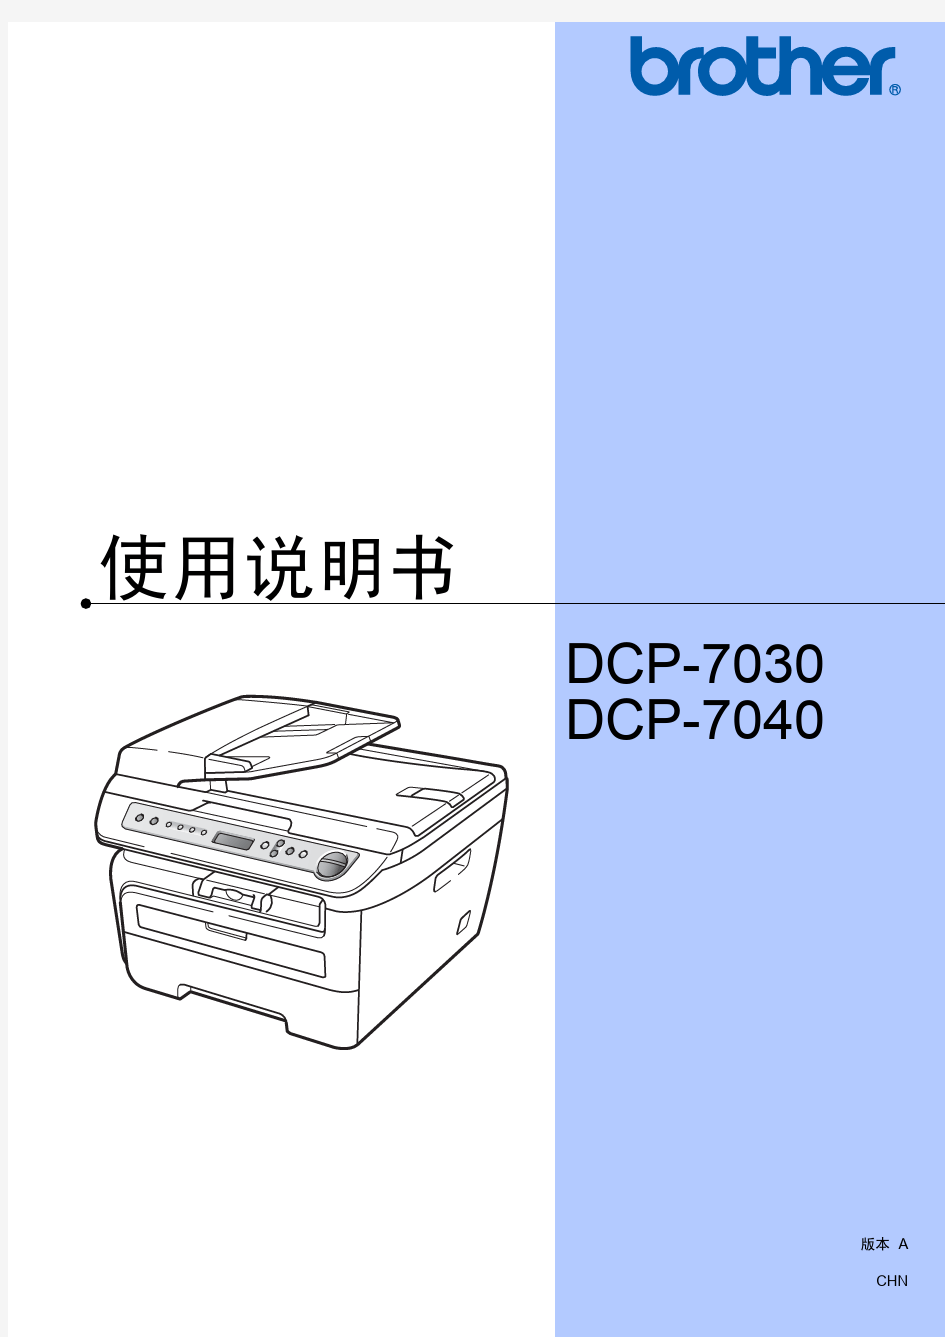 brother dcp-7040打印机说明书